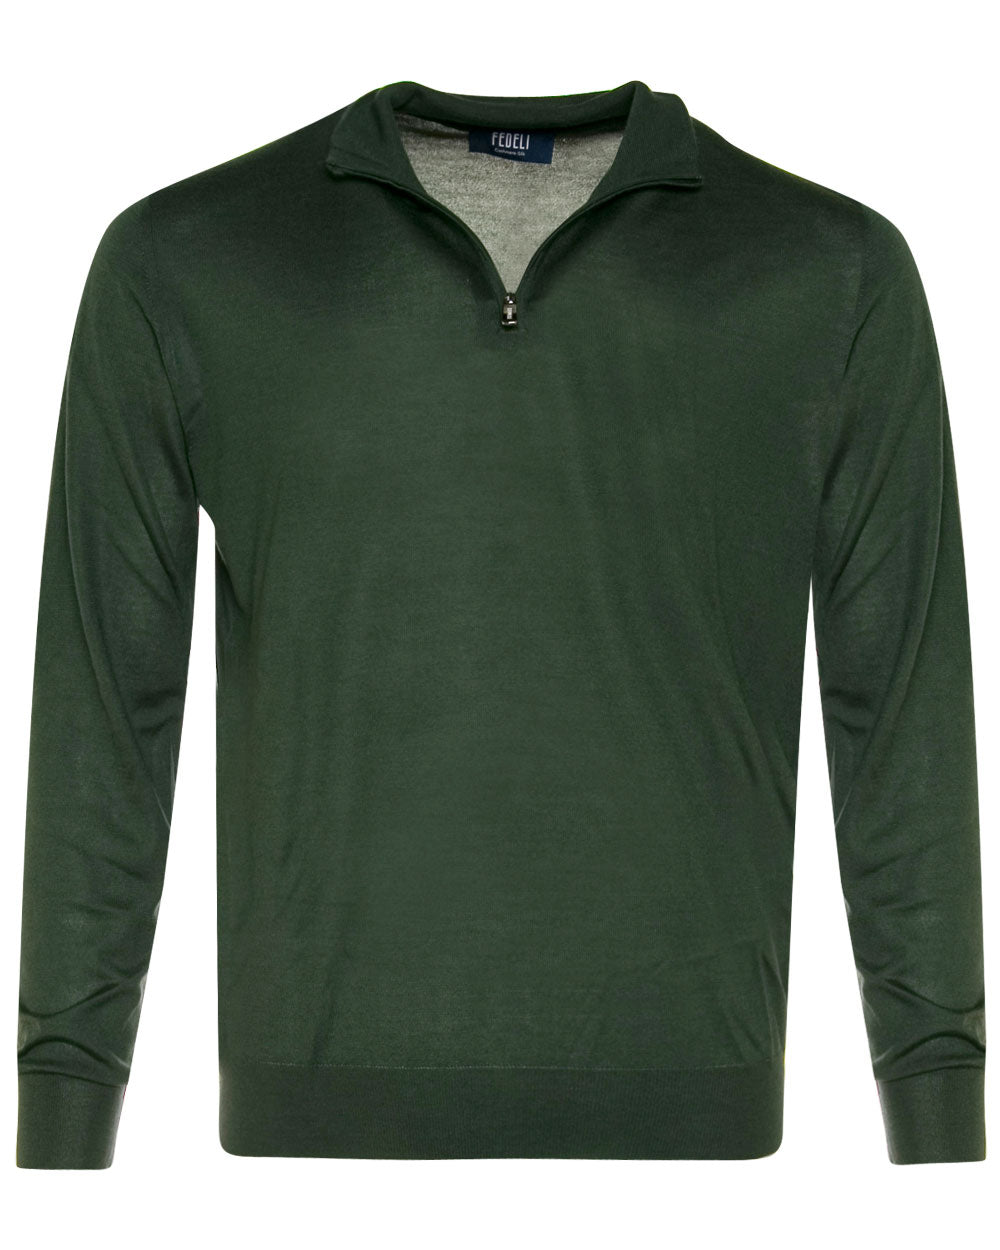 Green Cashmere Fine Gauge Quarter Zip Sweater